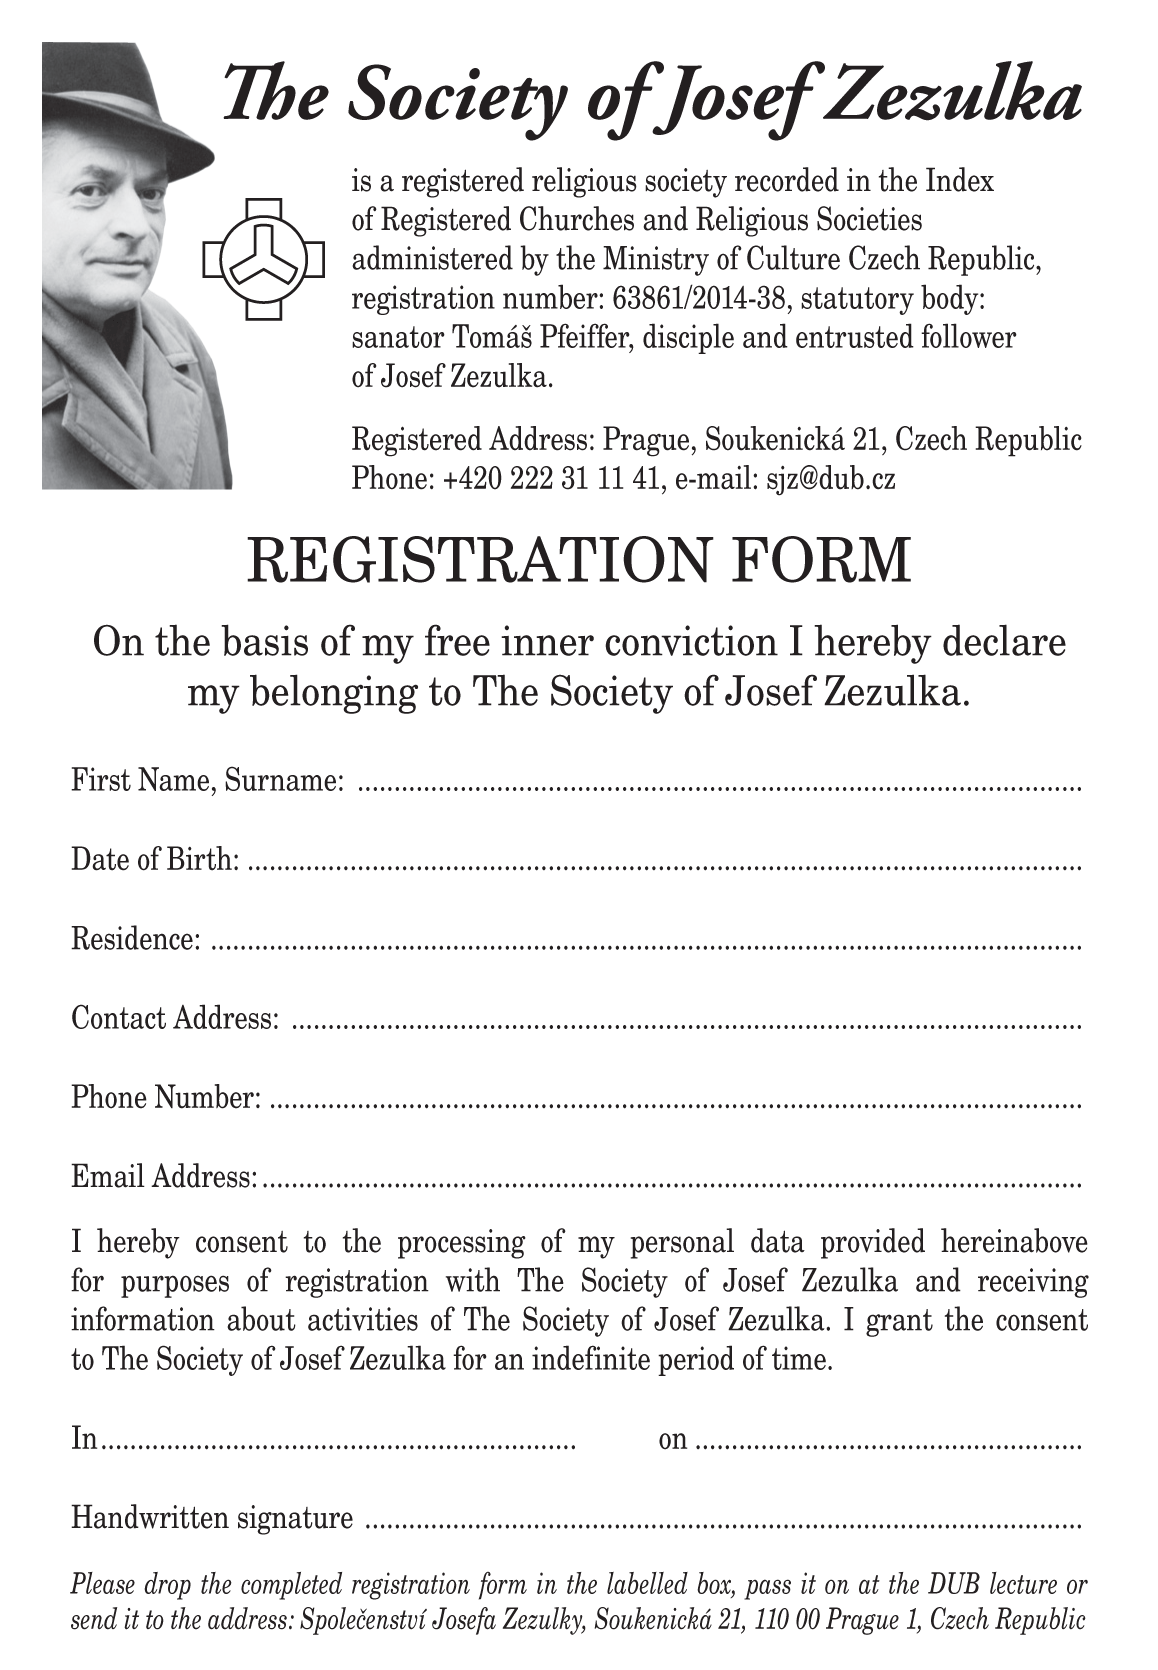 Registration form - The Society of Josef Zezulka